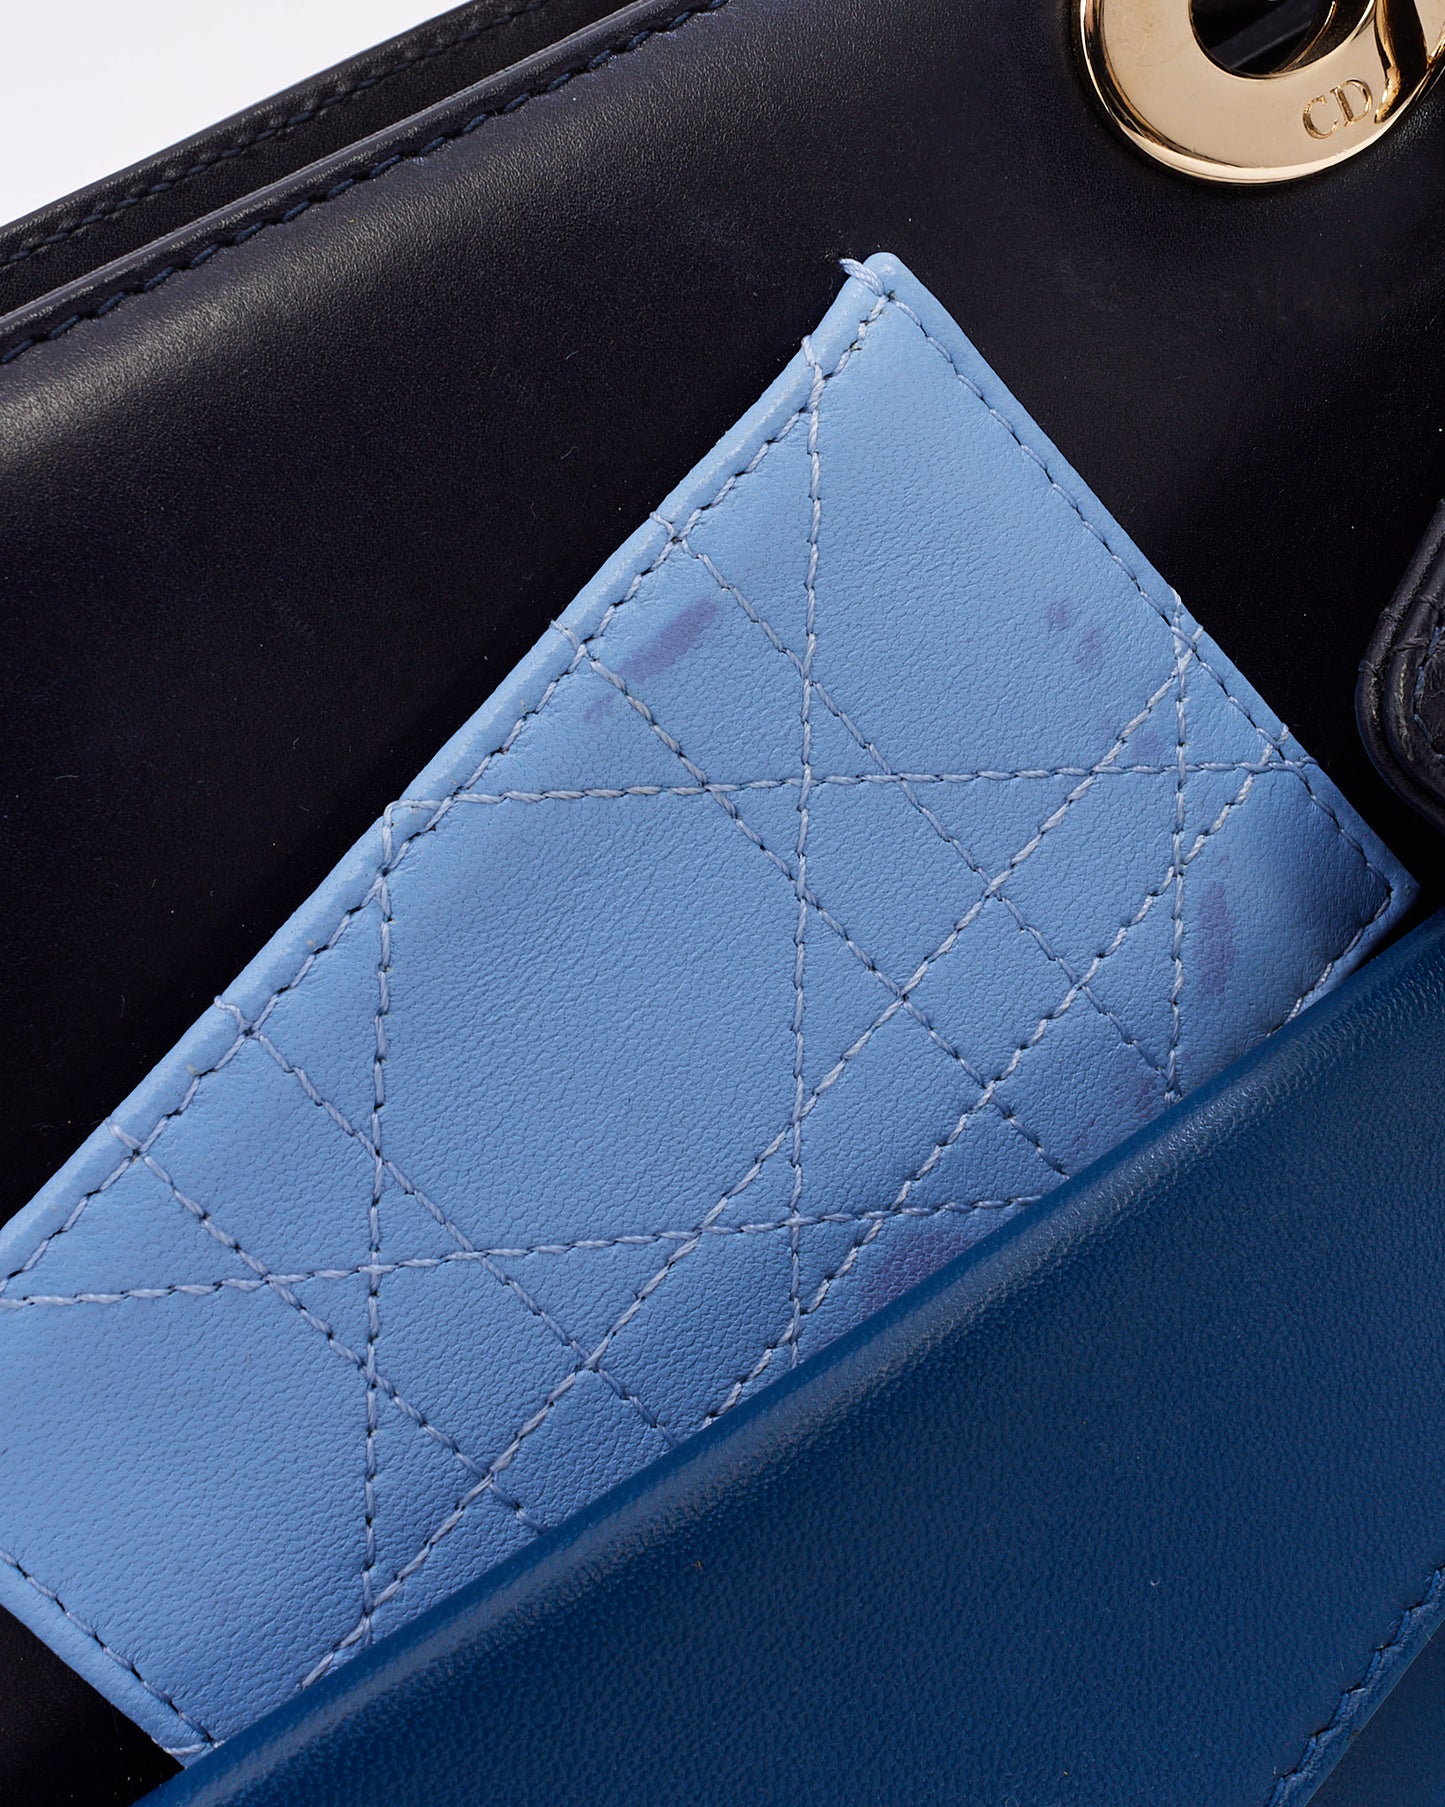 Dior Navy Leather Medium Lady Dior Pockets Top Handle Bag